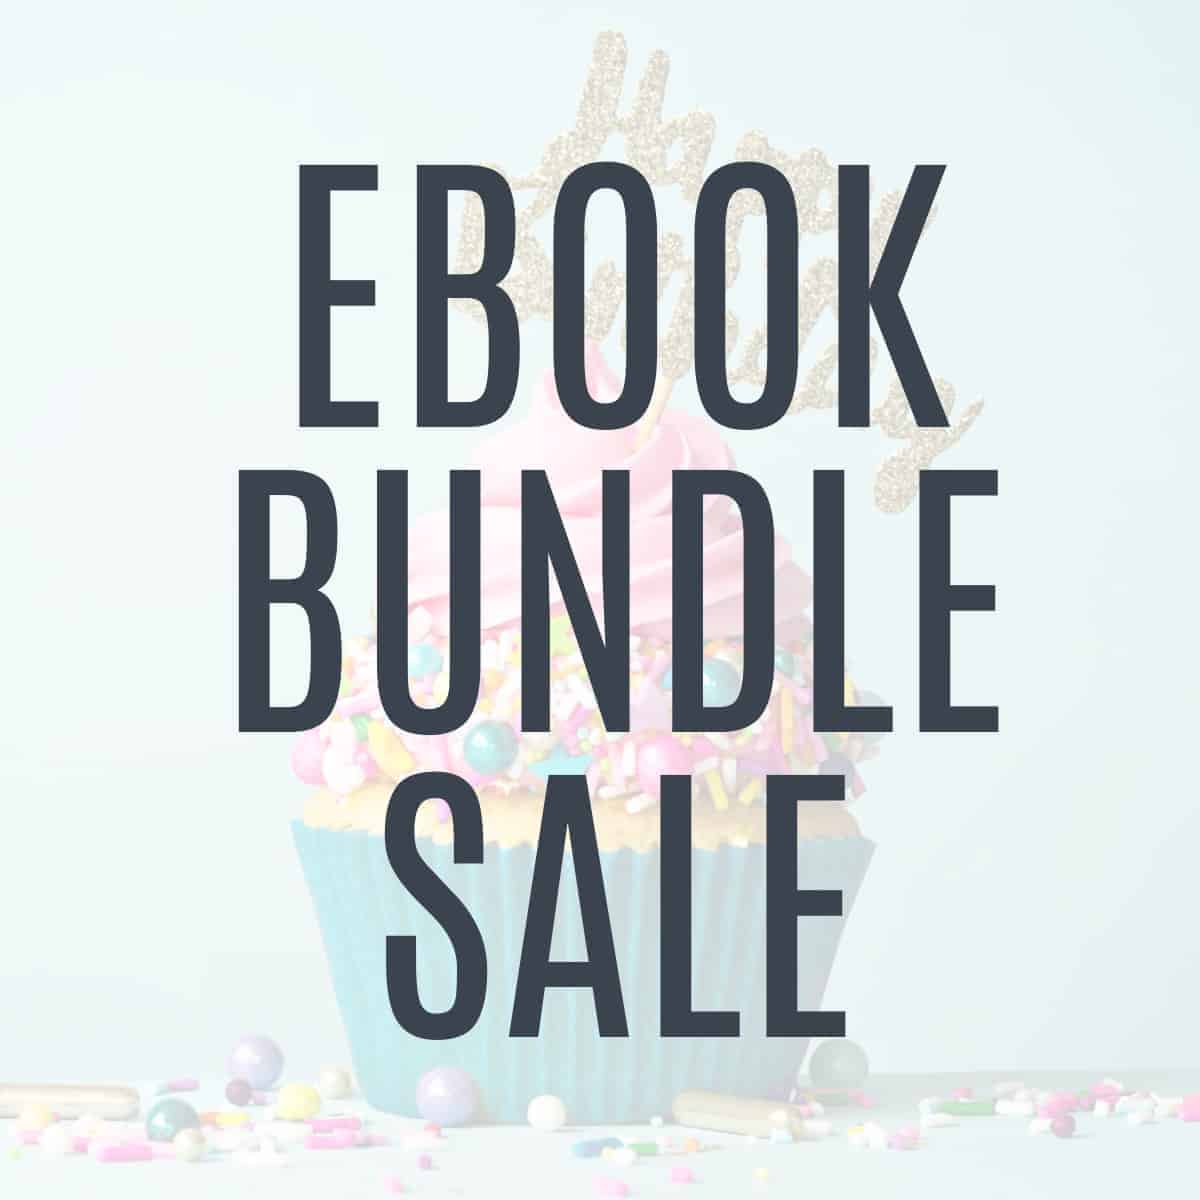 Cutting for Business Ebook Bundle Sale - cuttingforbusiness.com